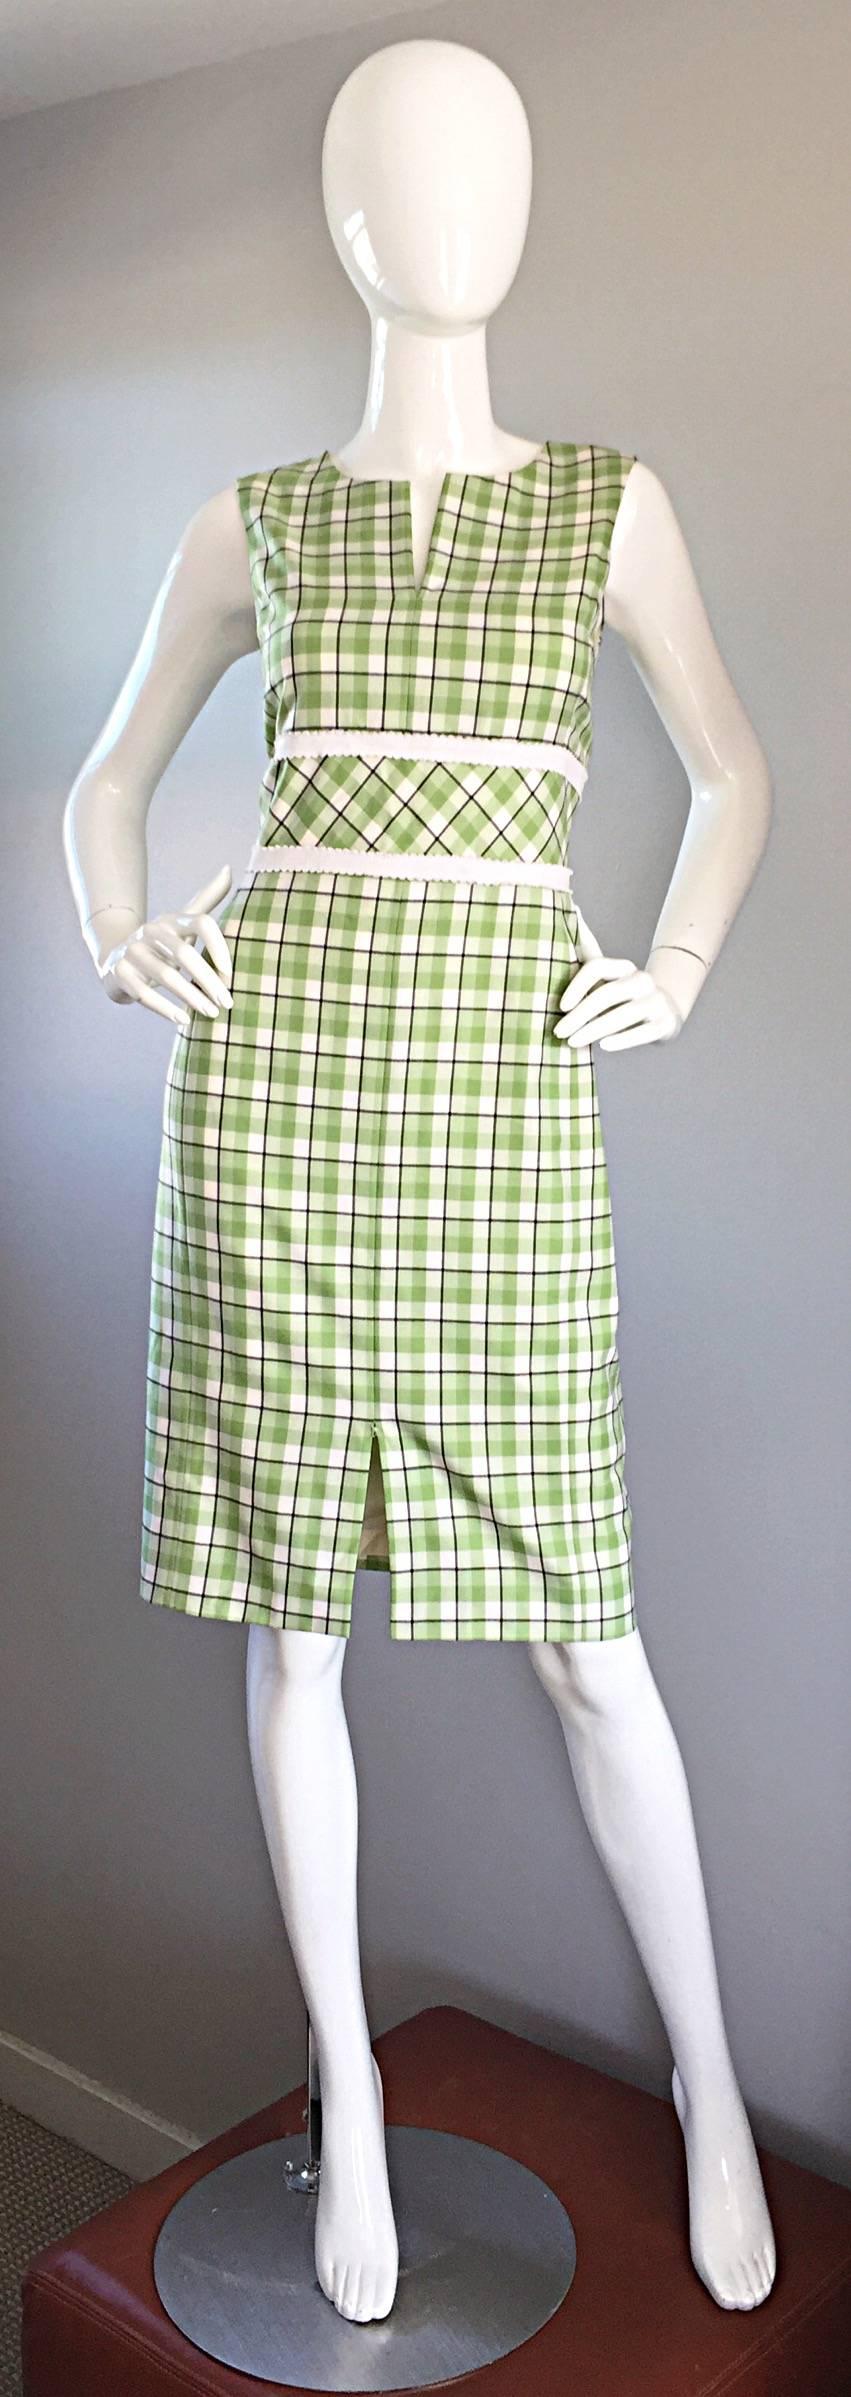 Oscar de La Renta Size 6 / 8 Saks 5th Ave Green + White Checkered Plaid Dress  For Sale 1